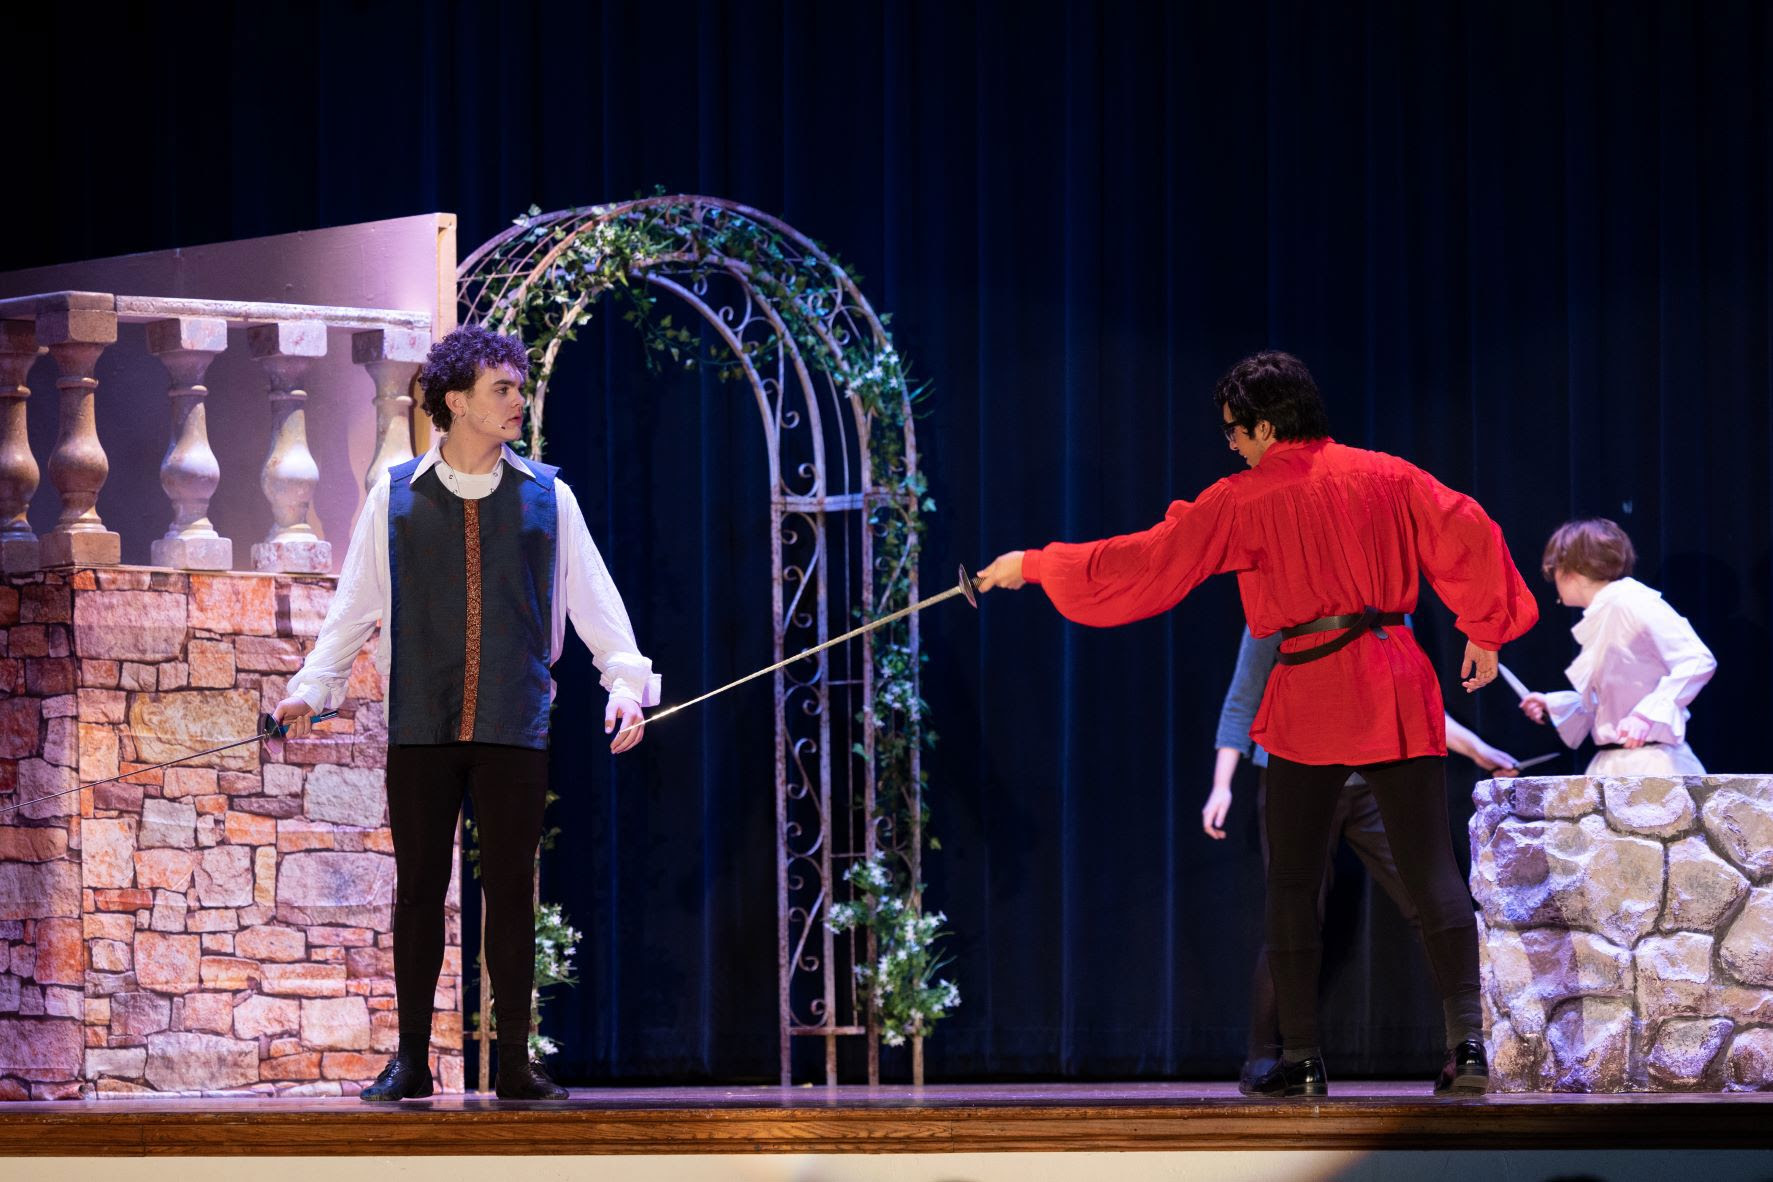 Romeo and Juliet swordfighting scene